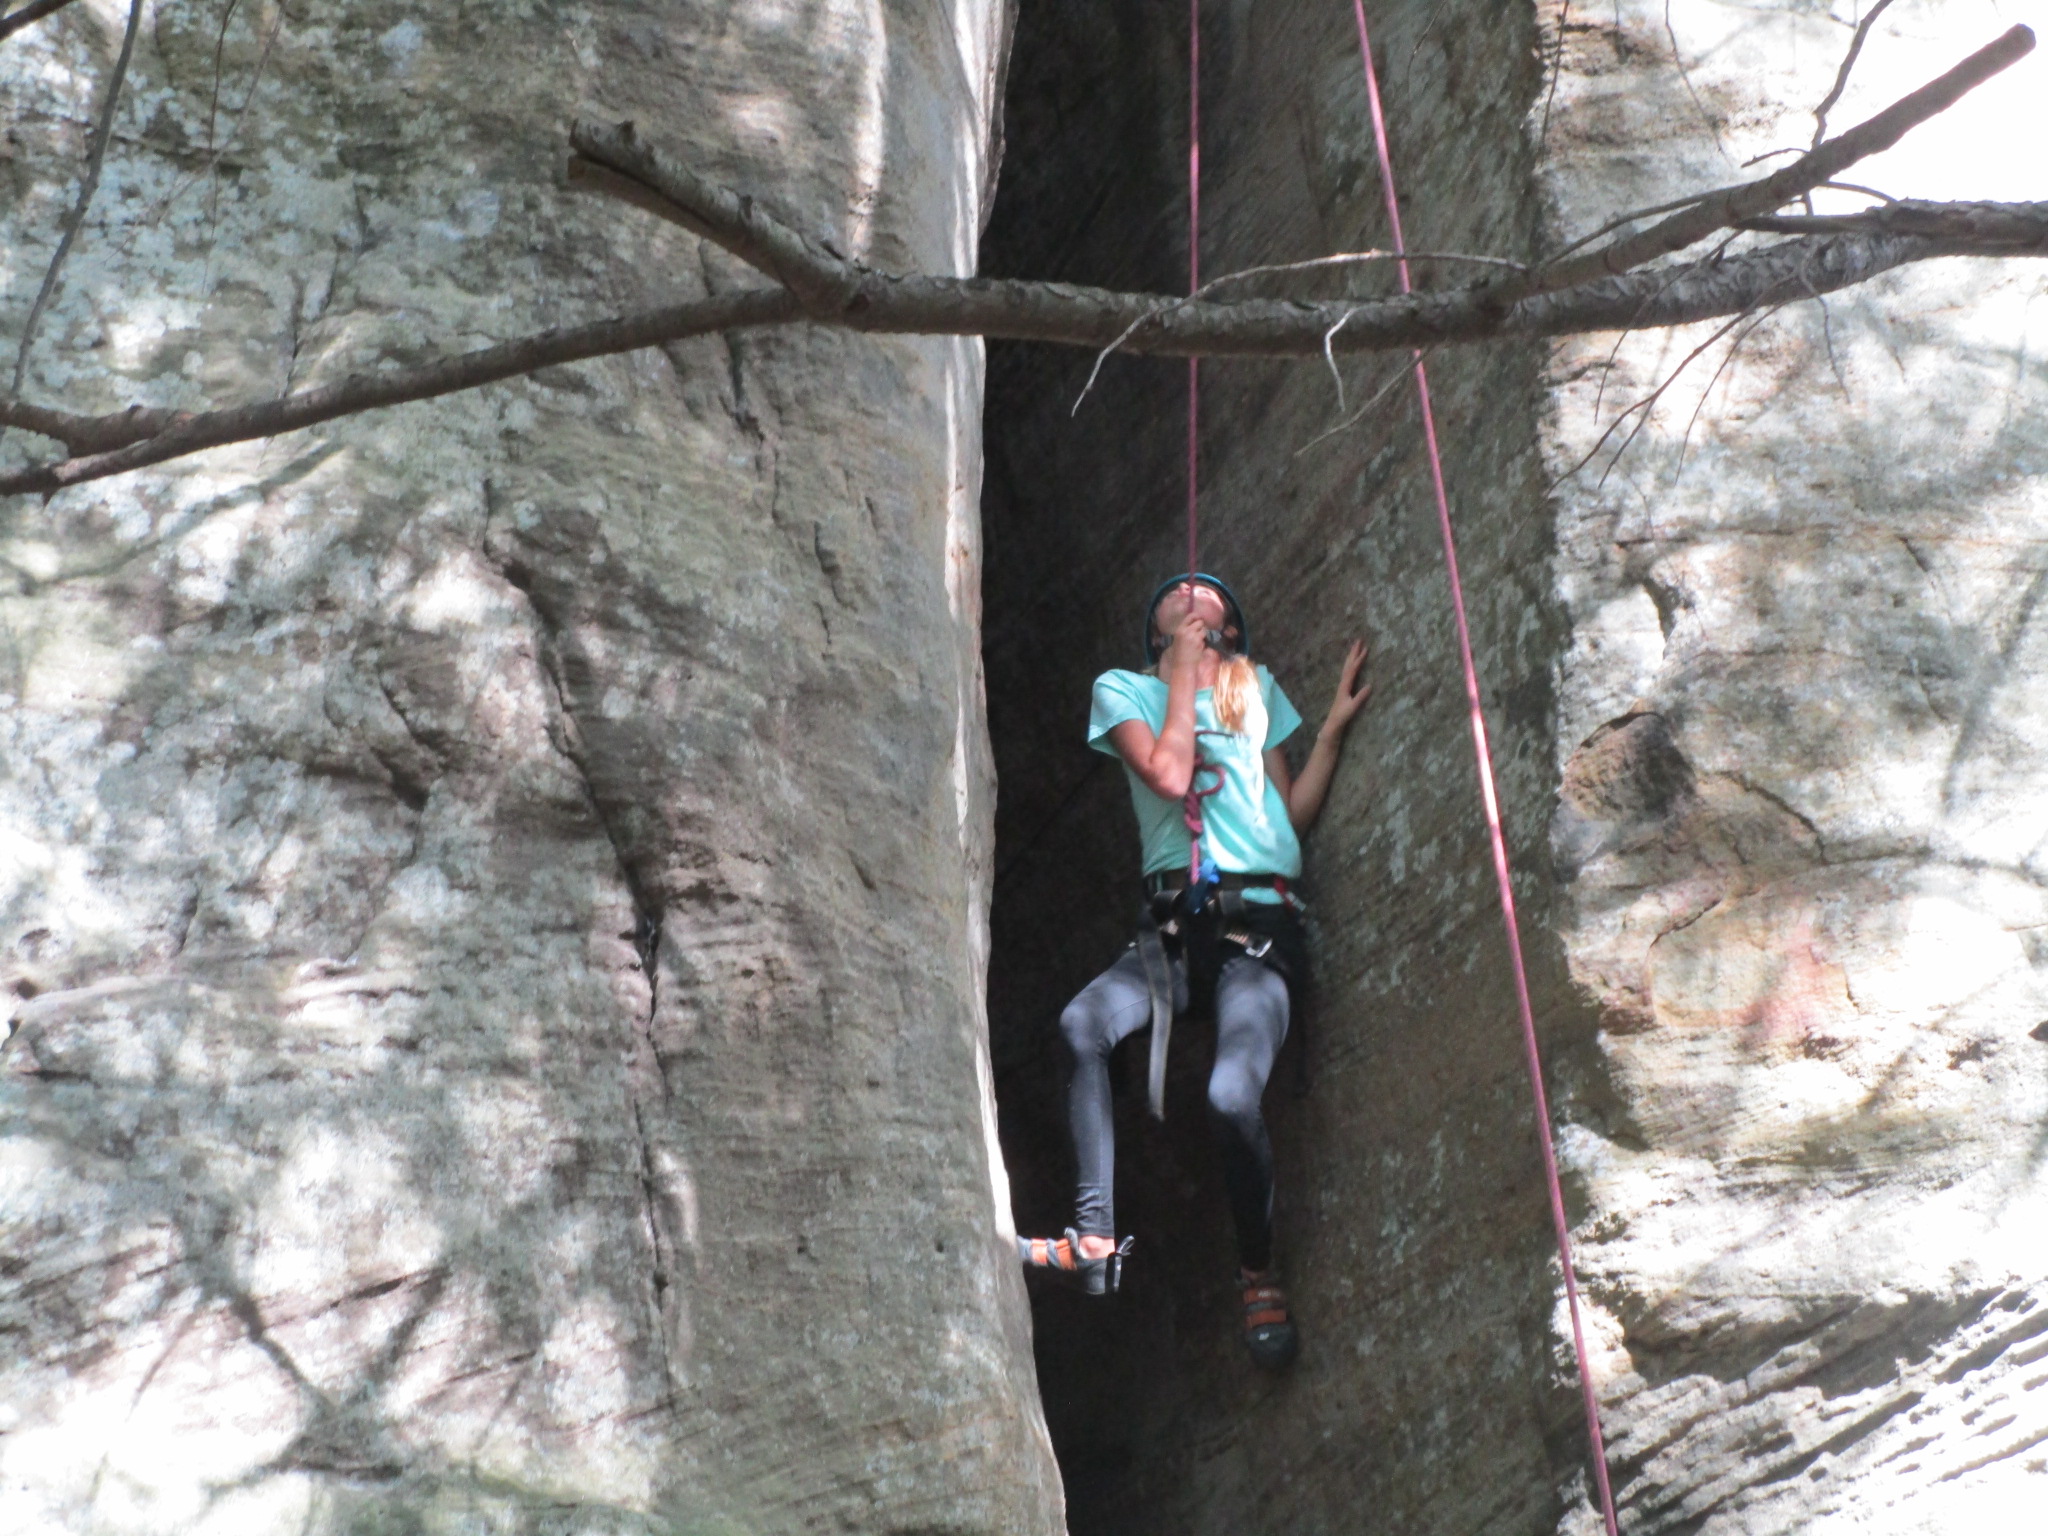 Rock Climbing – The 8th Grade Way